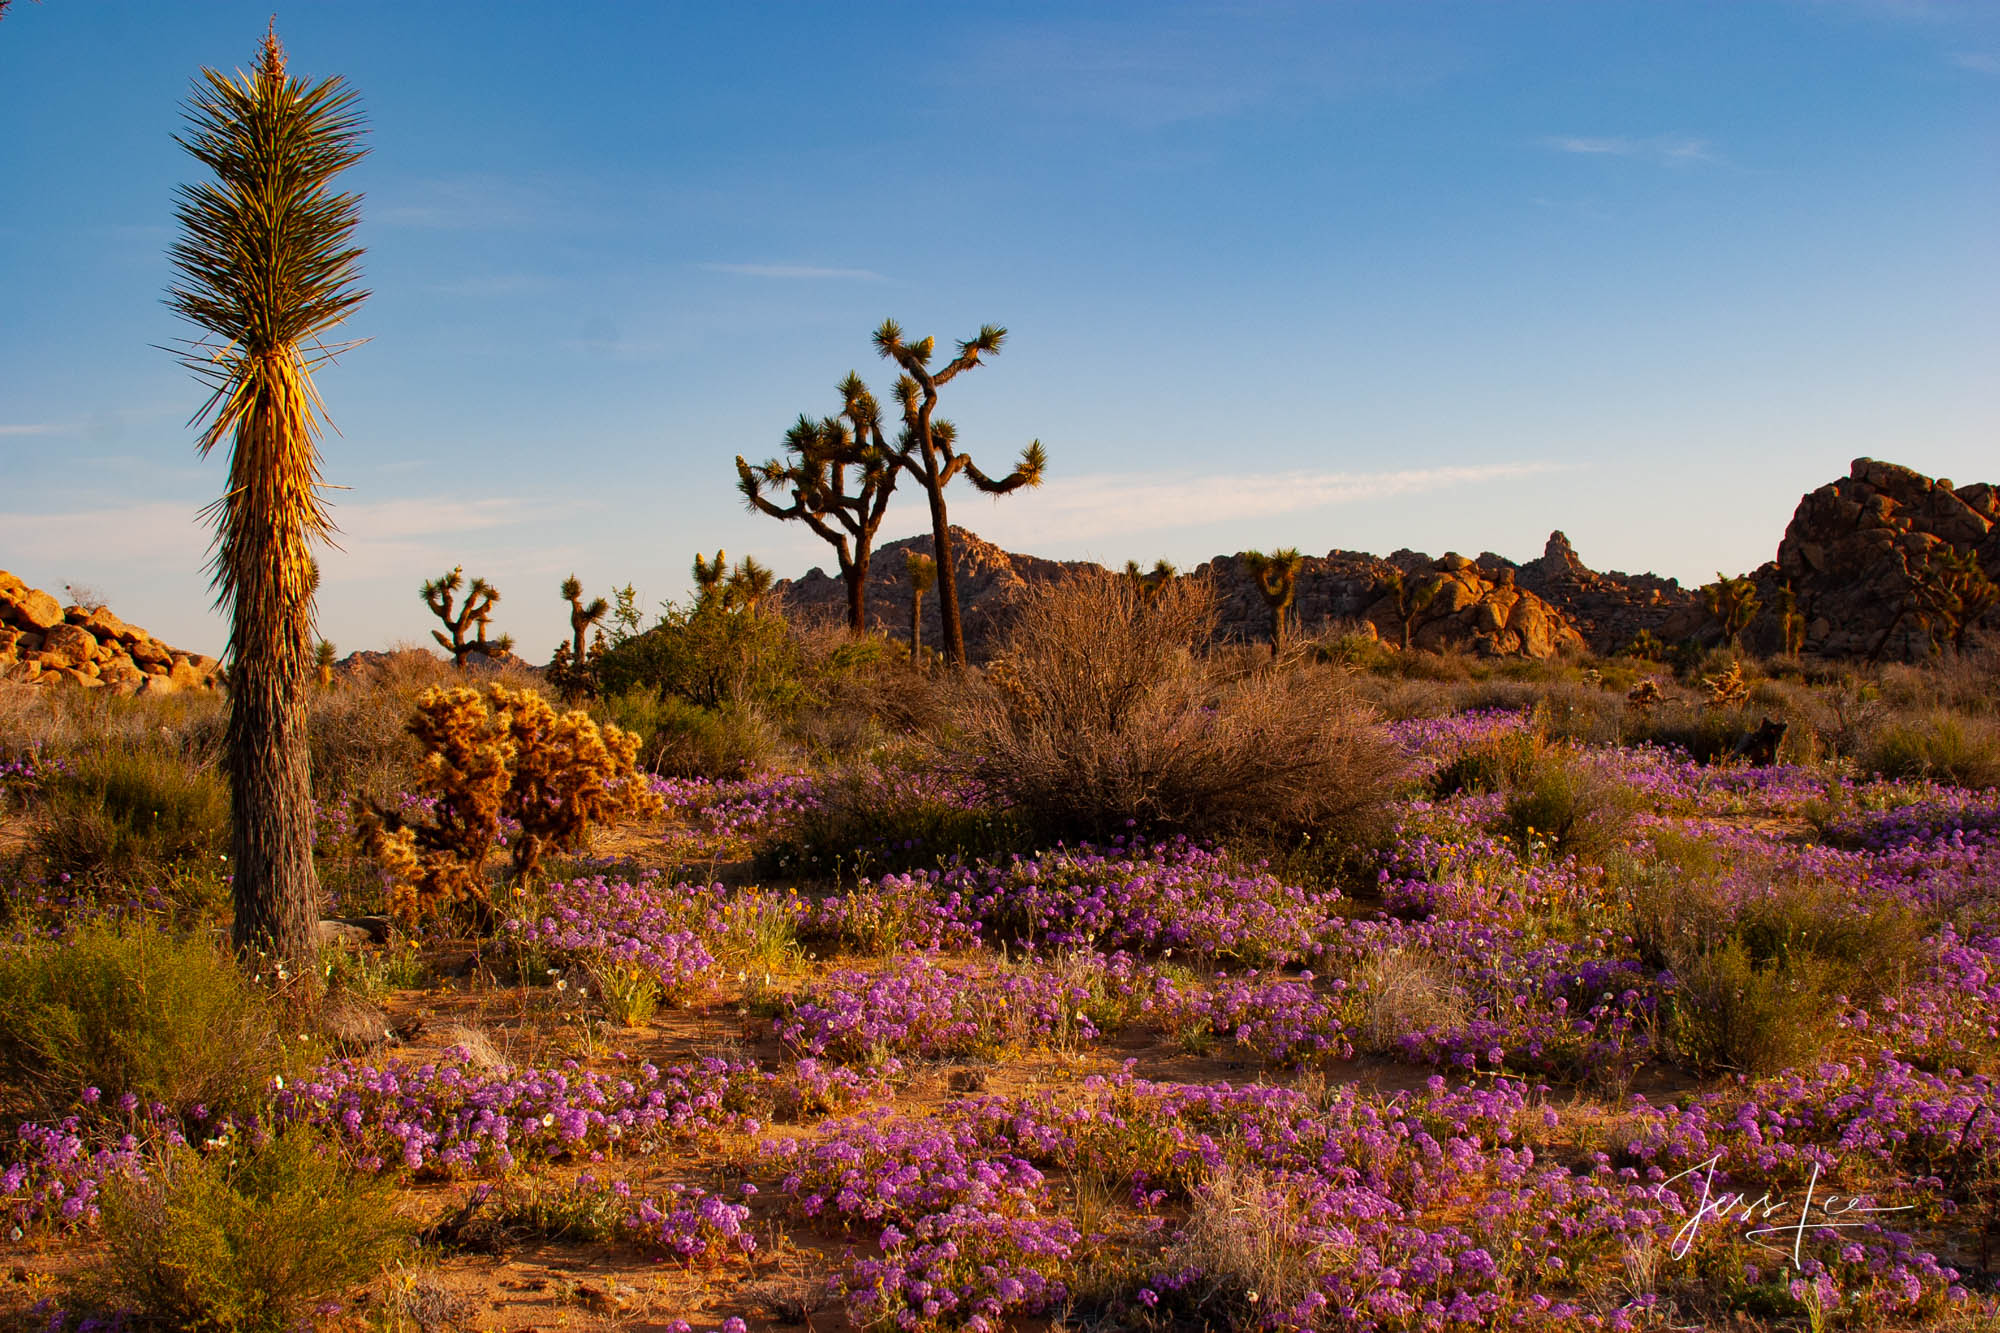 Joshua Trees and purple flowers in California's desert. 